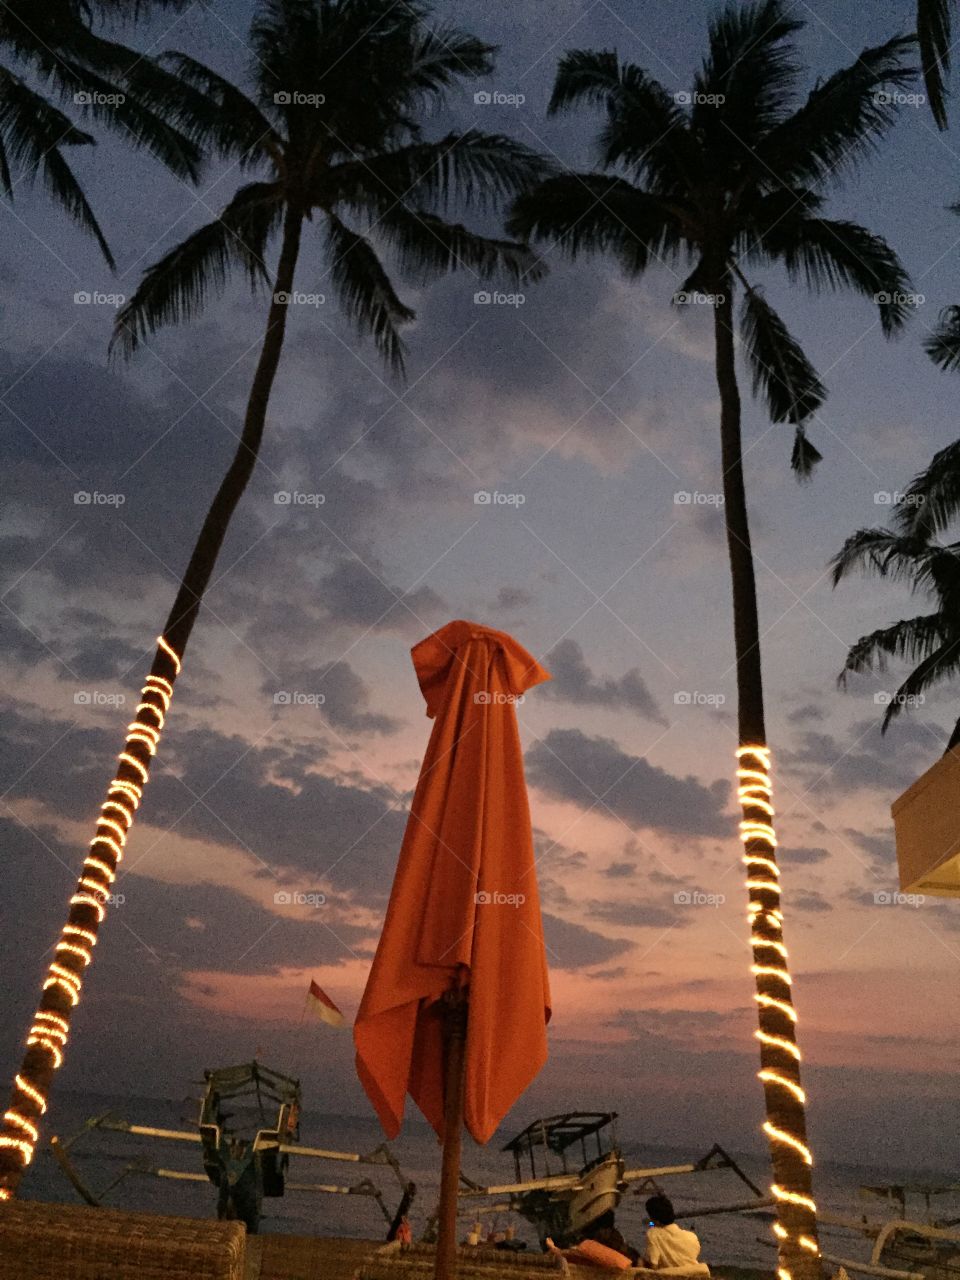 Bali beach by night